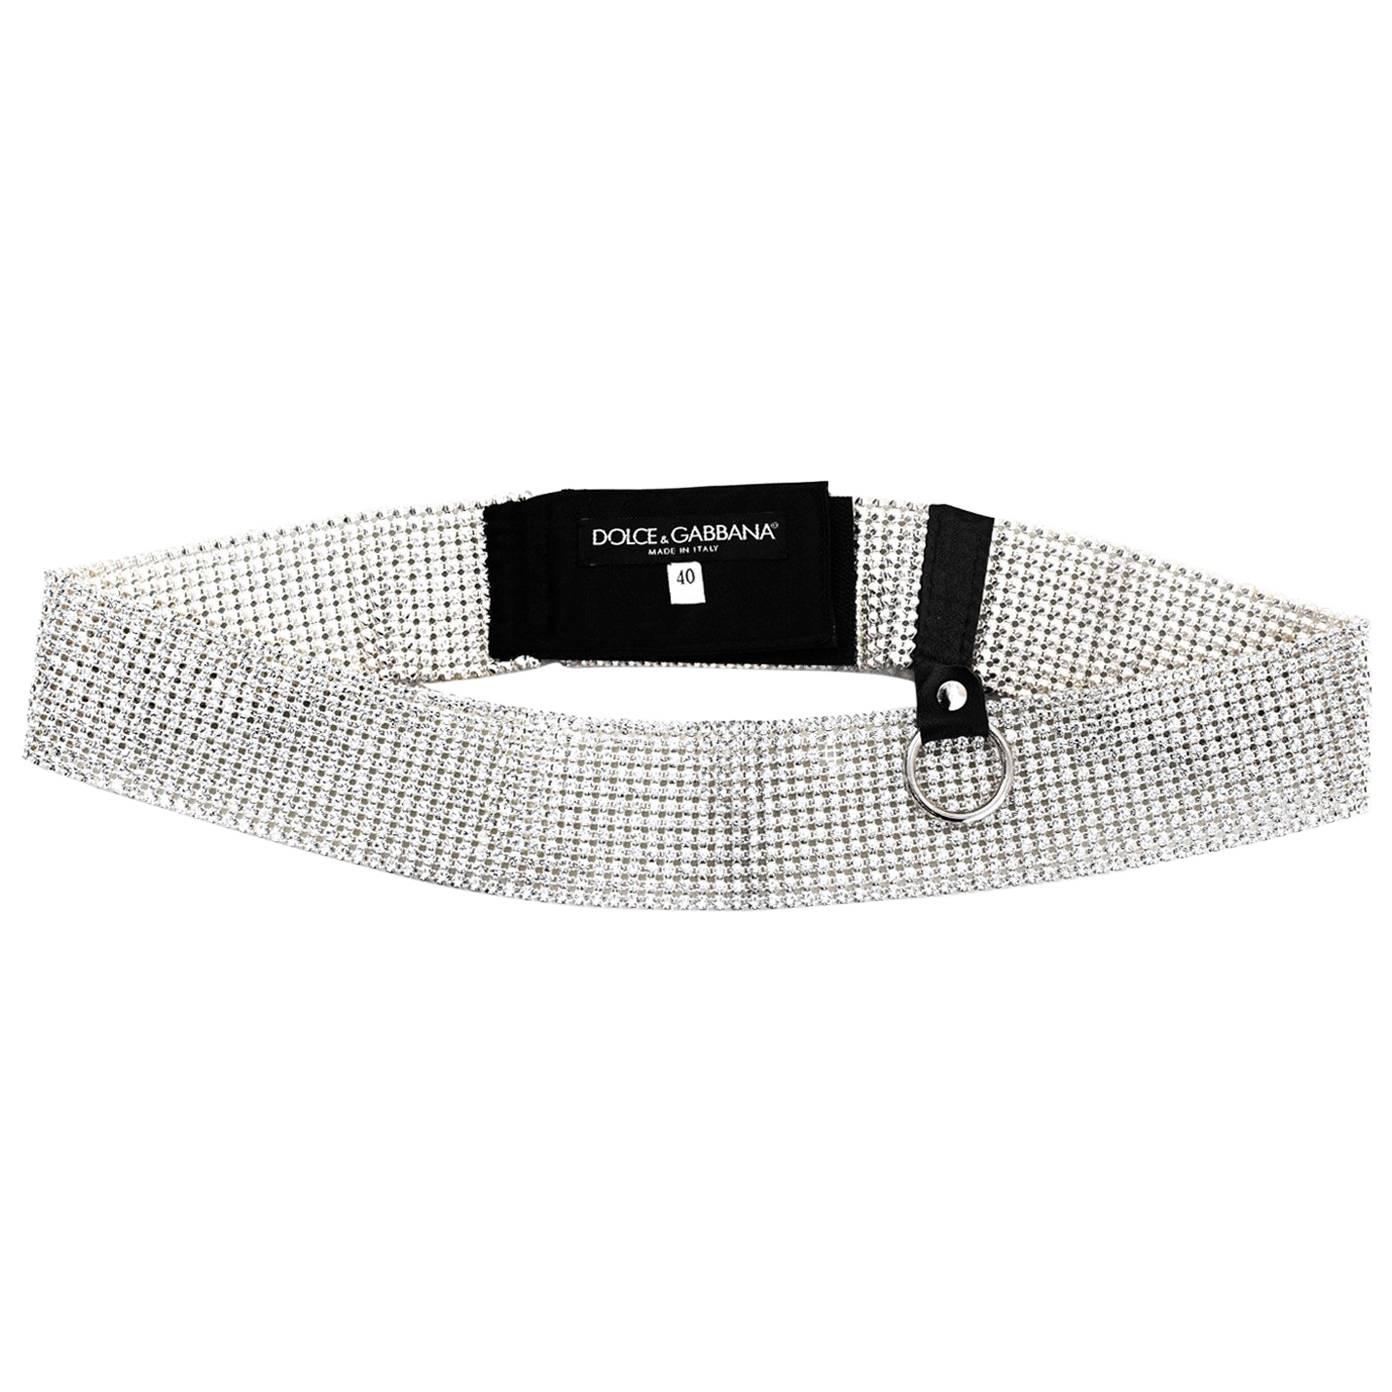 Dolce & Gabbana Crystal Belt Sz 40 with Box